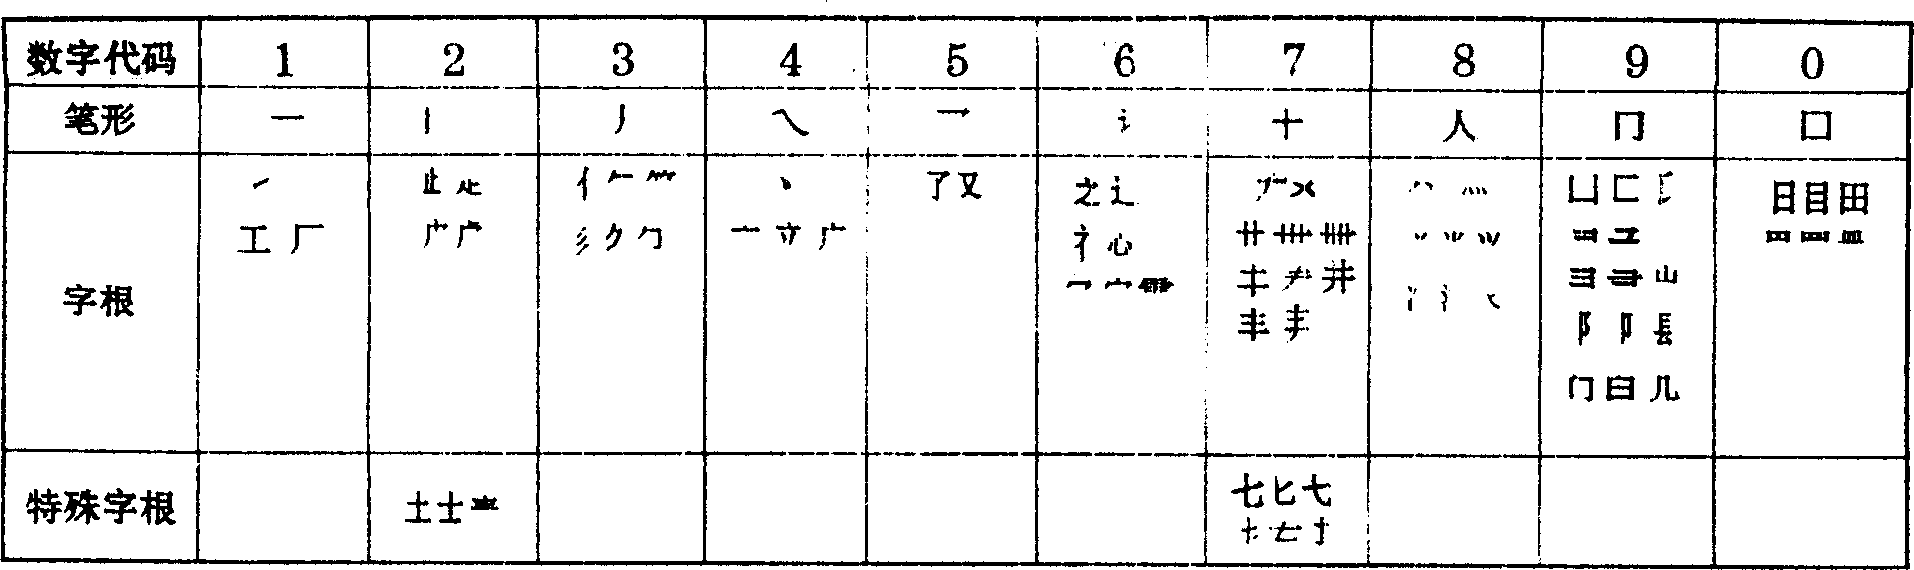 Chinese character input method in digital keys